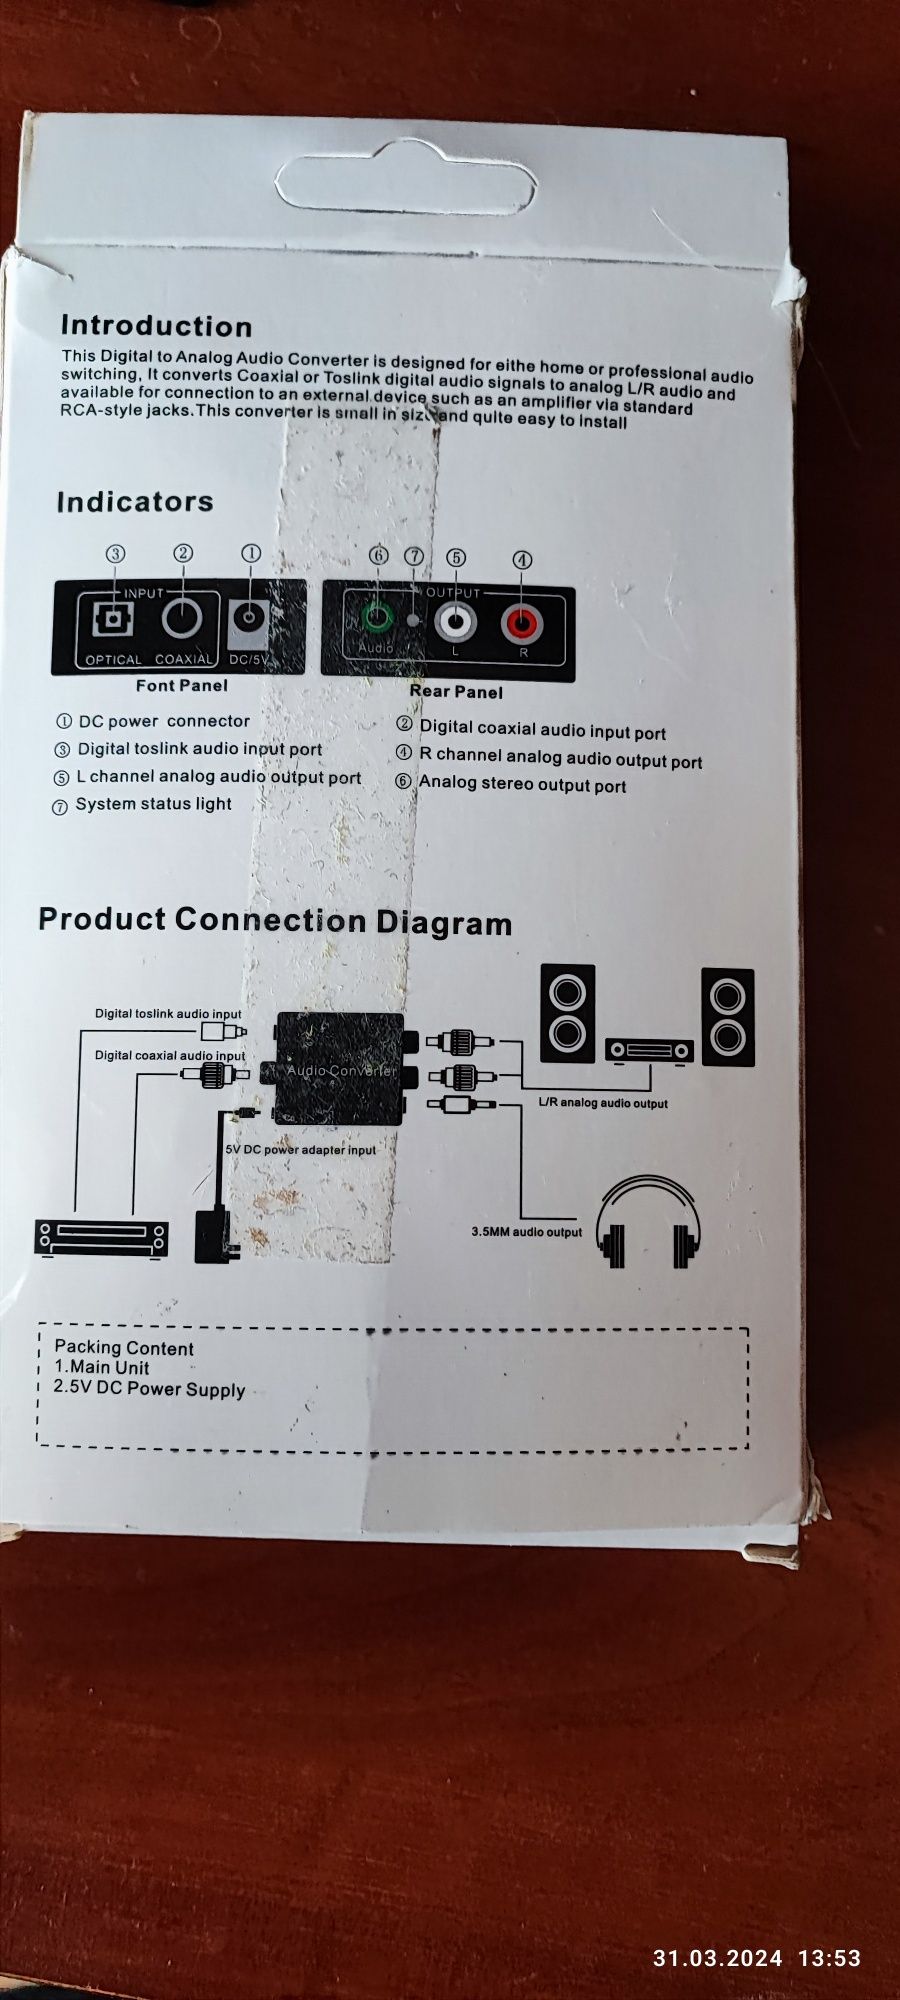 Конвектор звука  Digital to analog